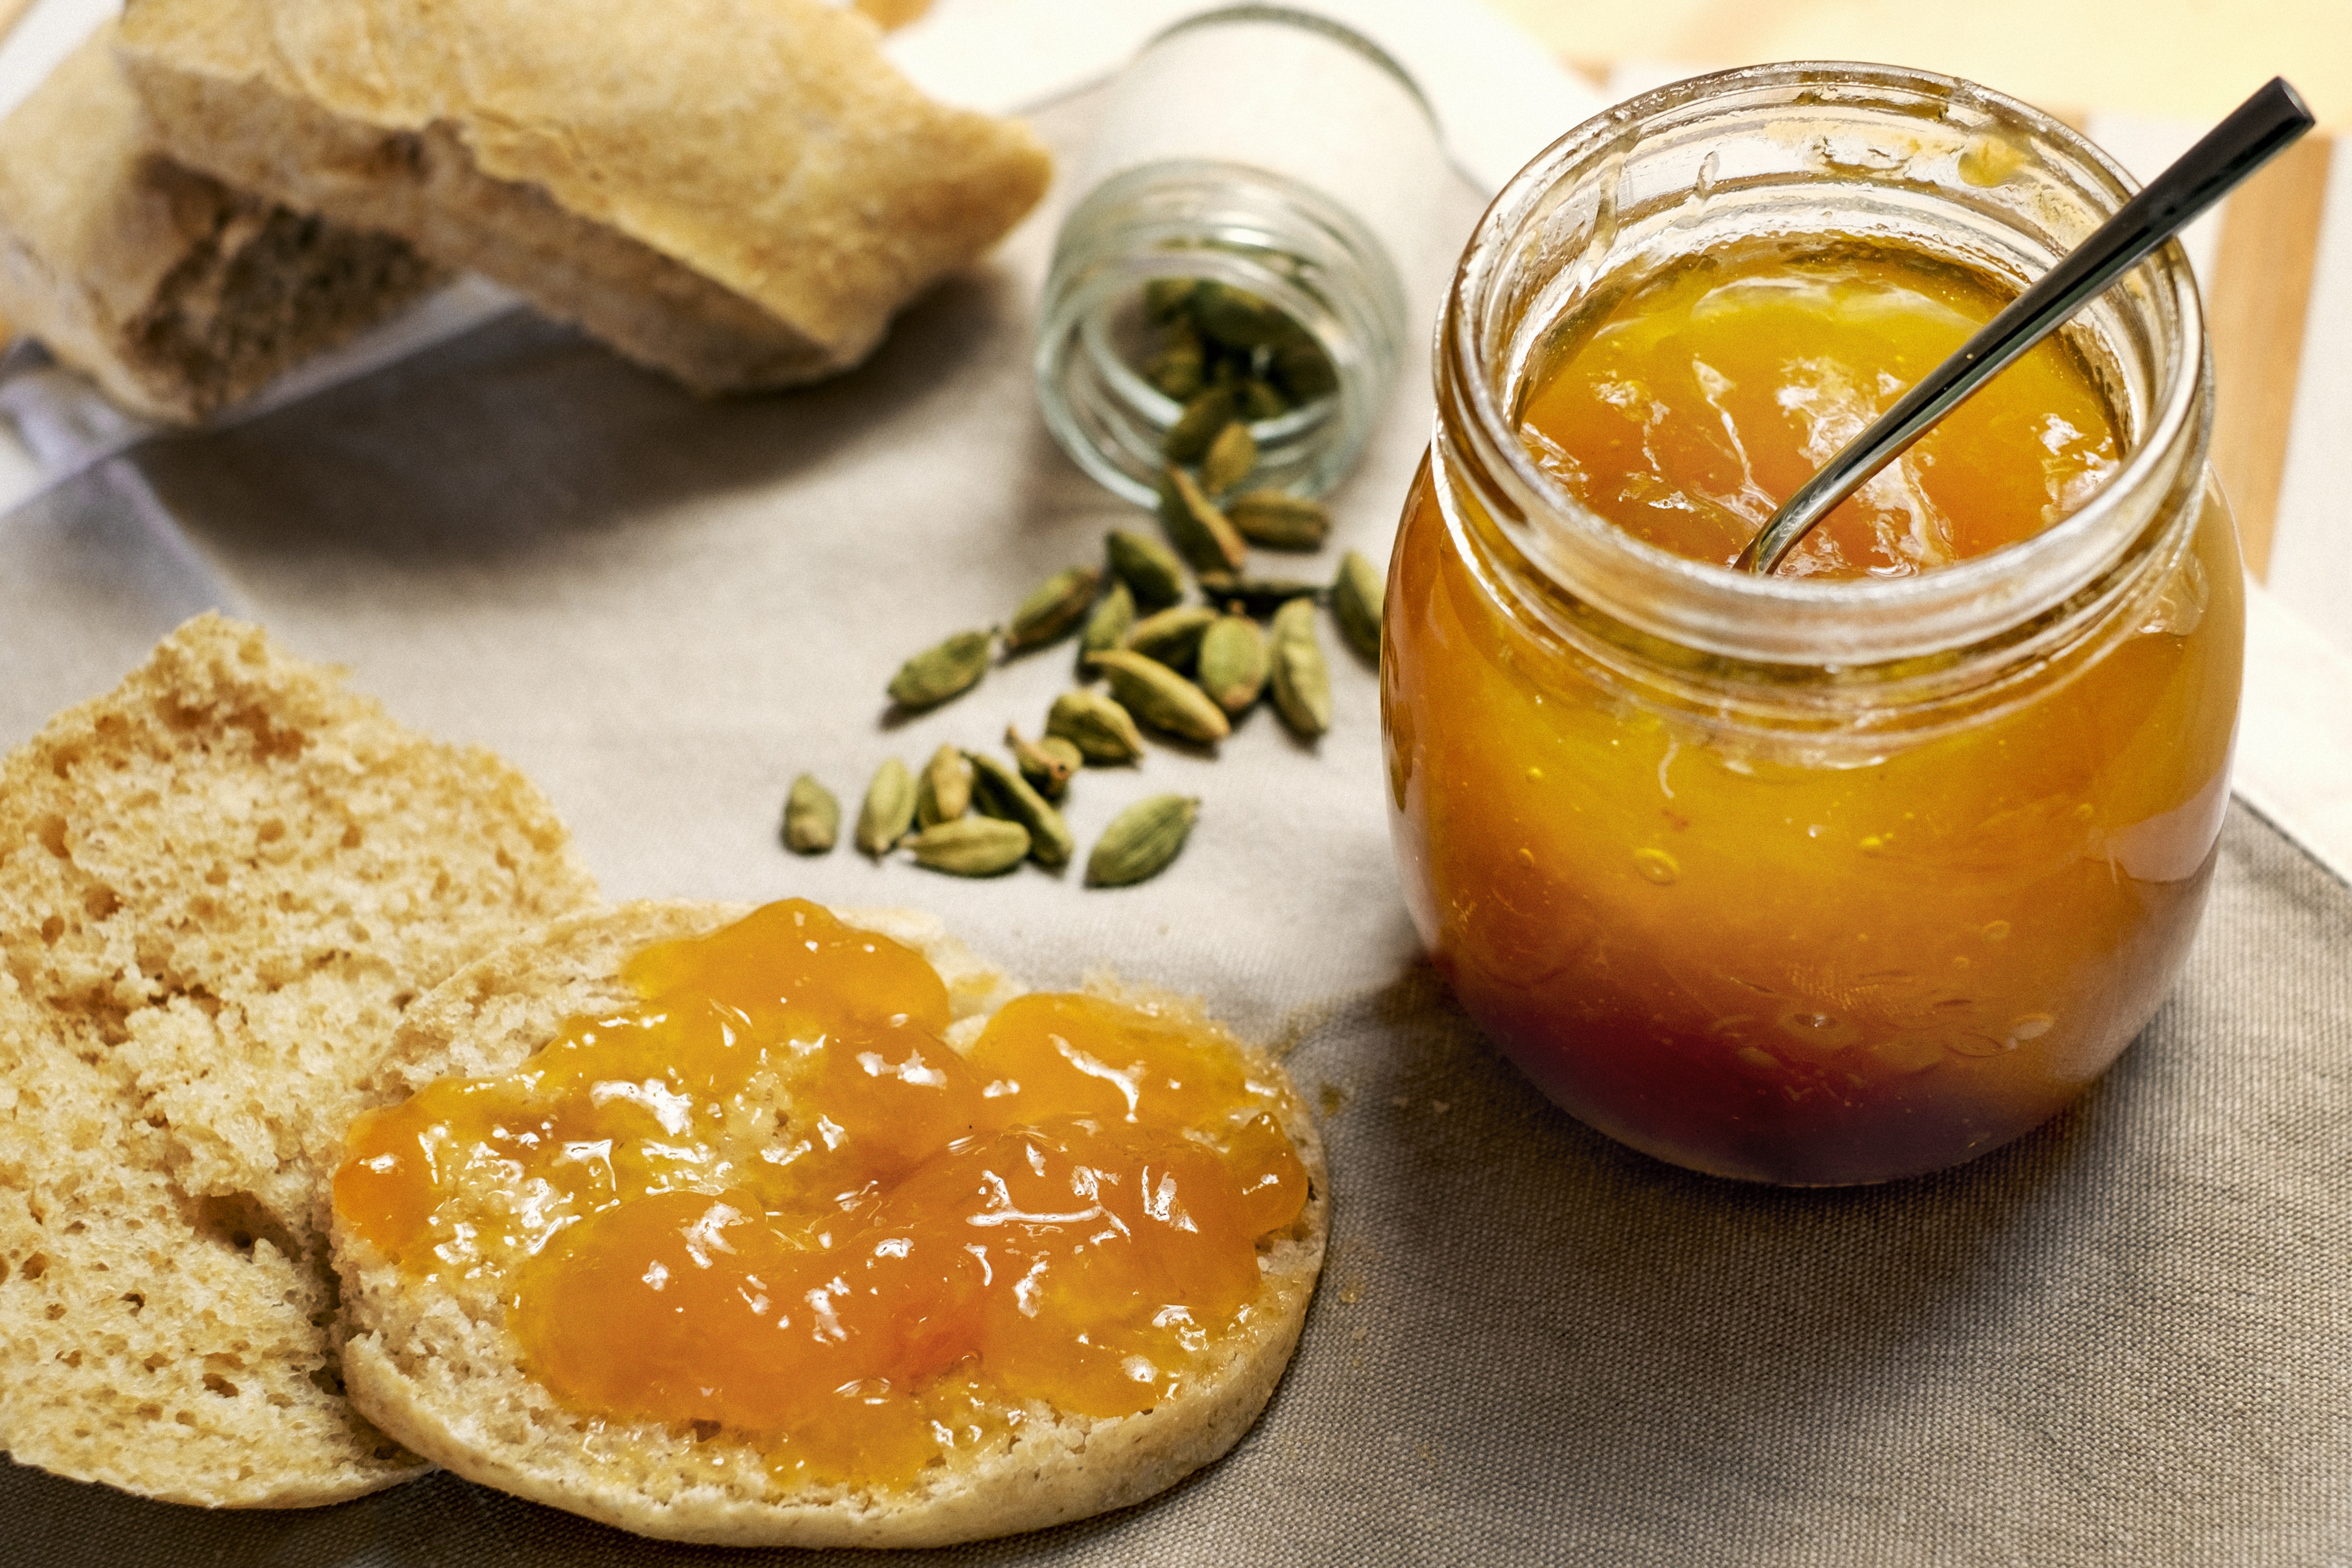 Apricot jam with cardamom - Bertazzoni